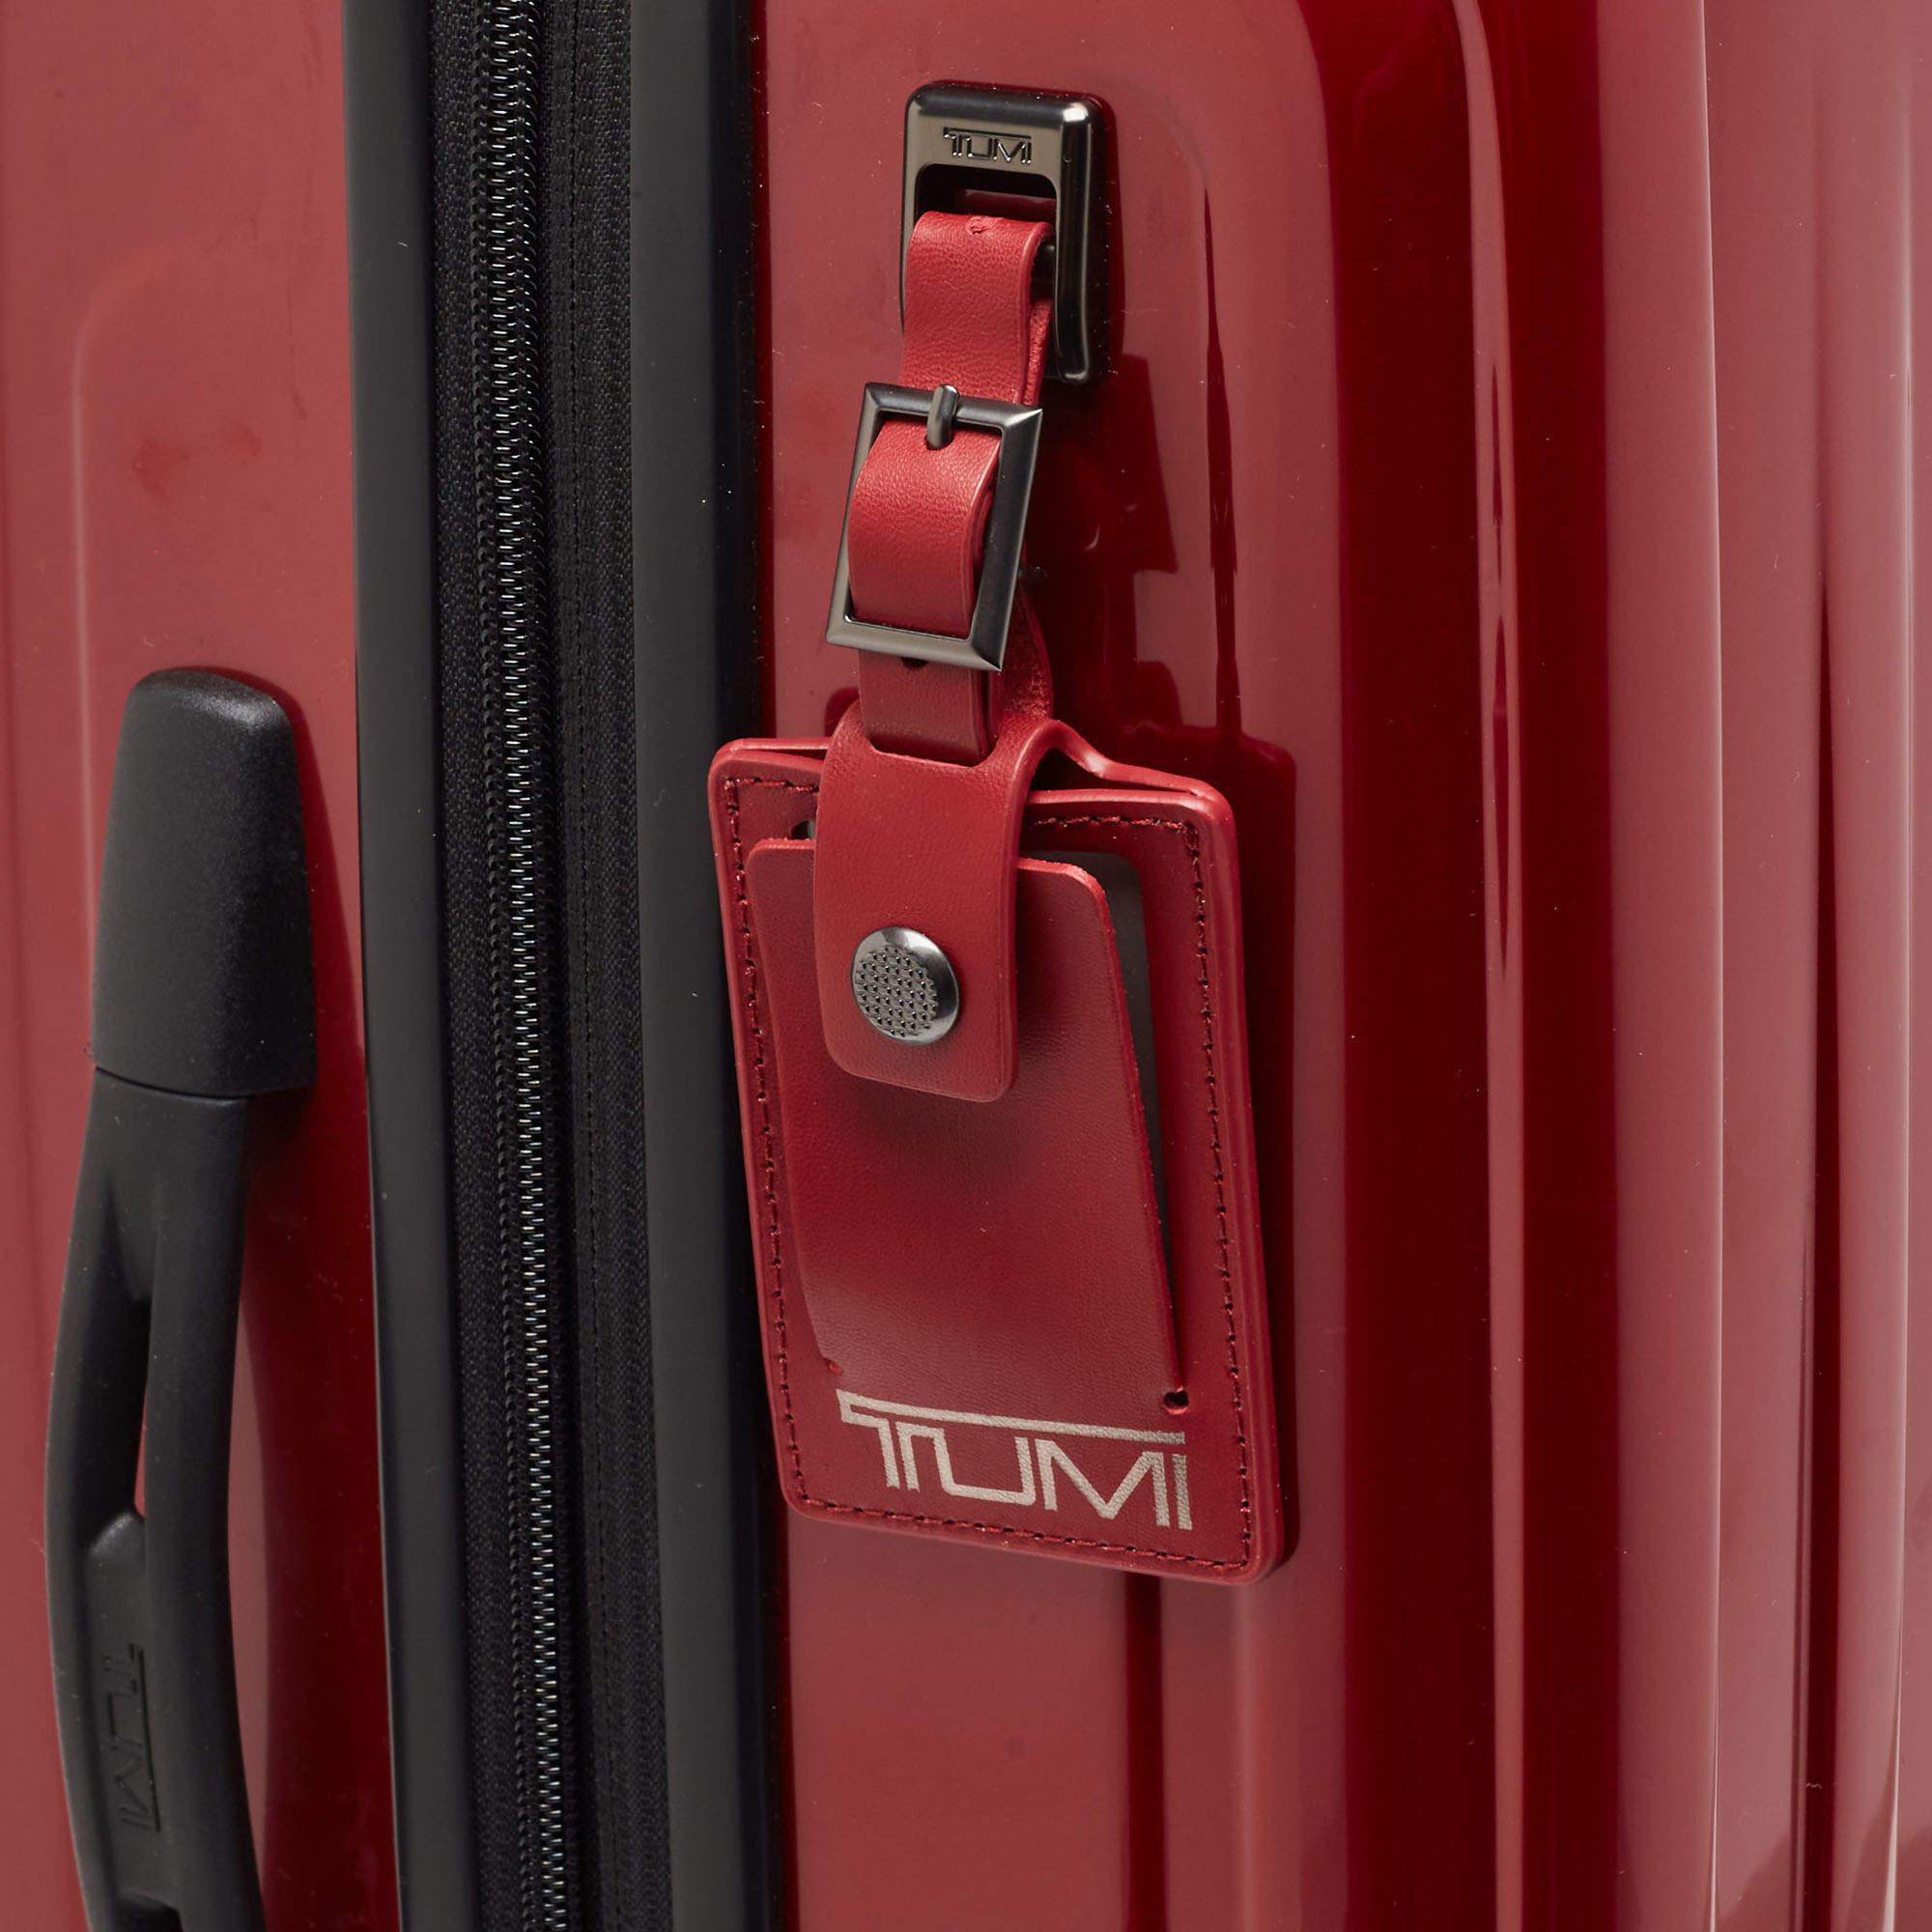 TUMI Rote 4 Rädern V4 International Expandable Carry On Luggage, ausziehbar im Angebot 7